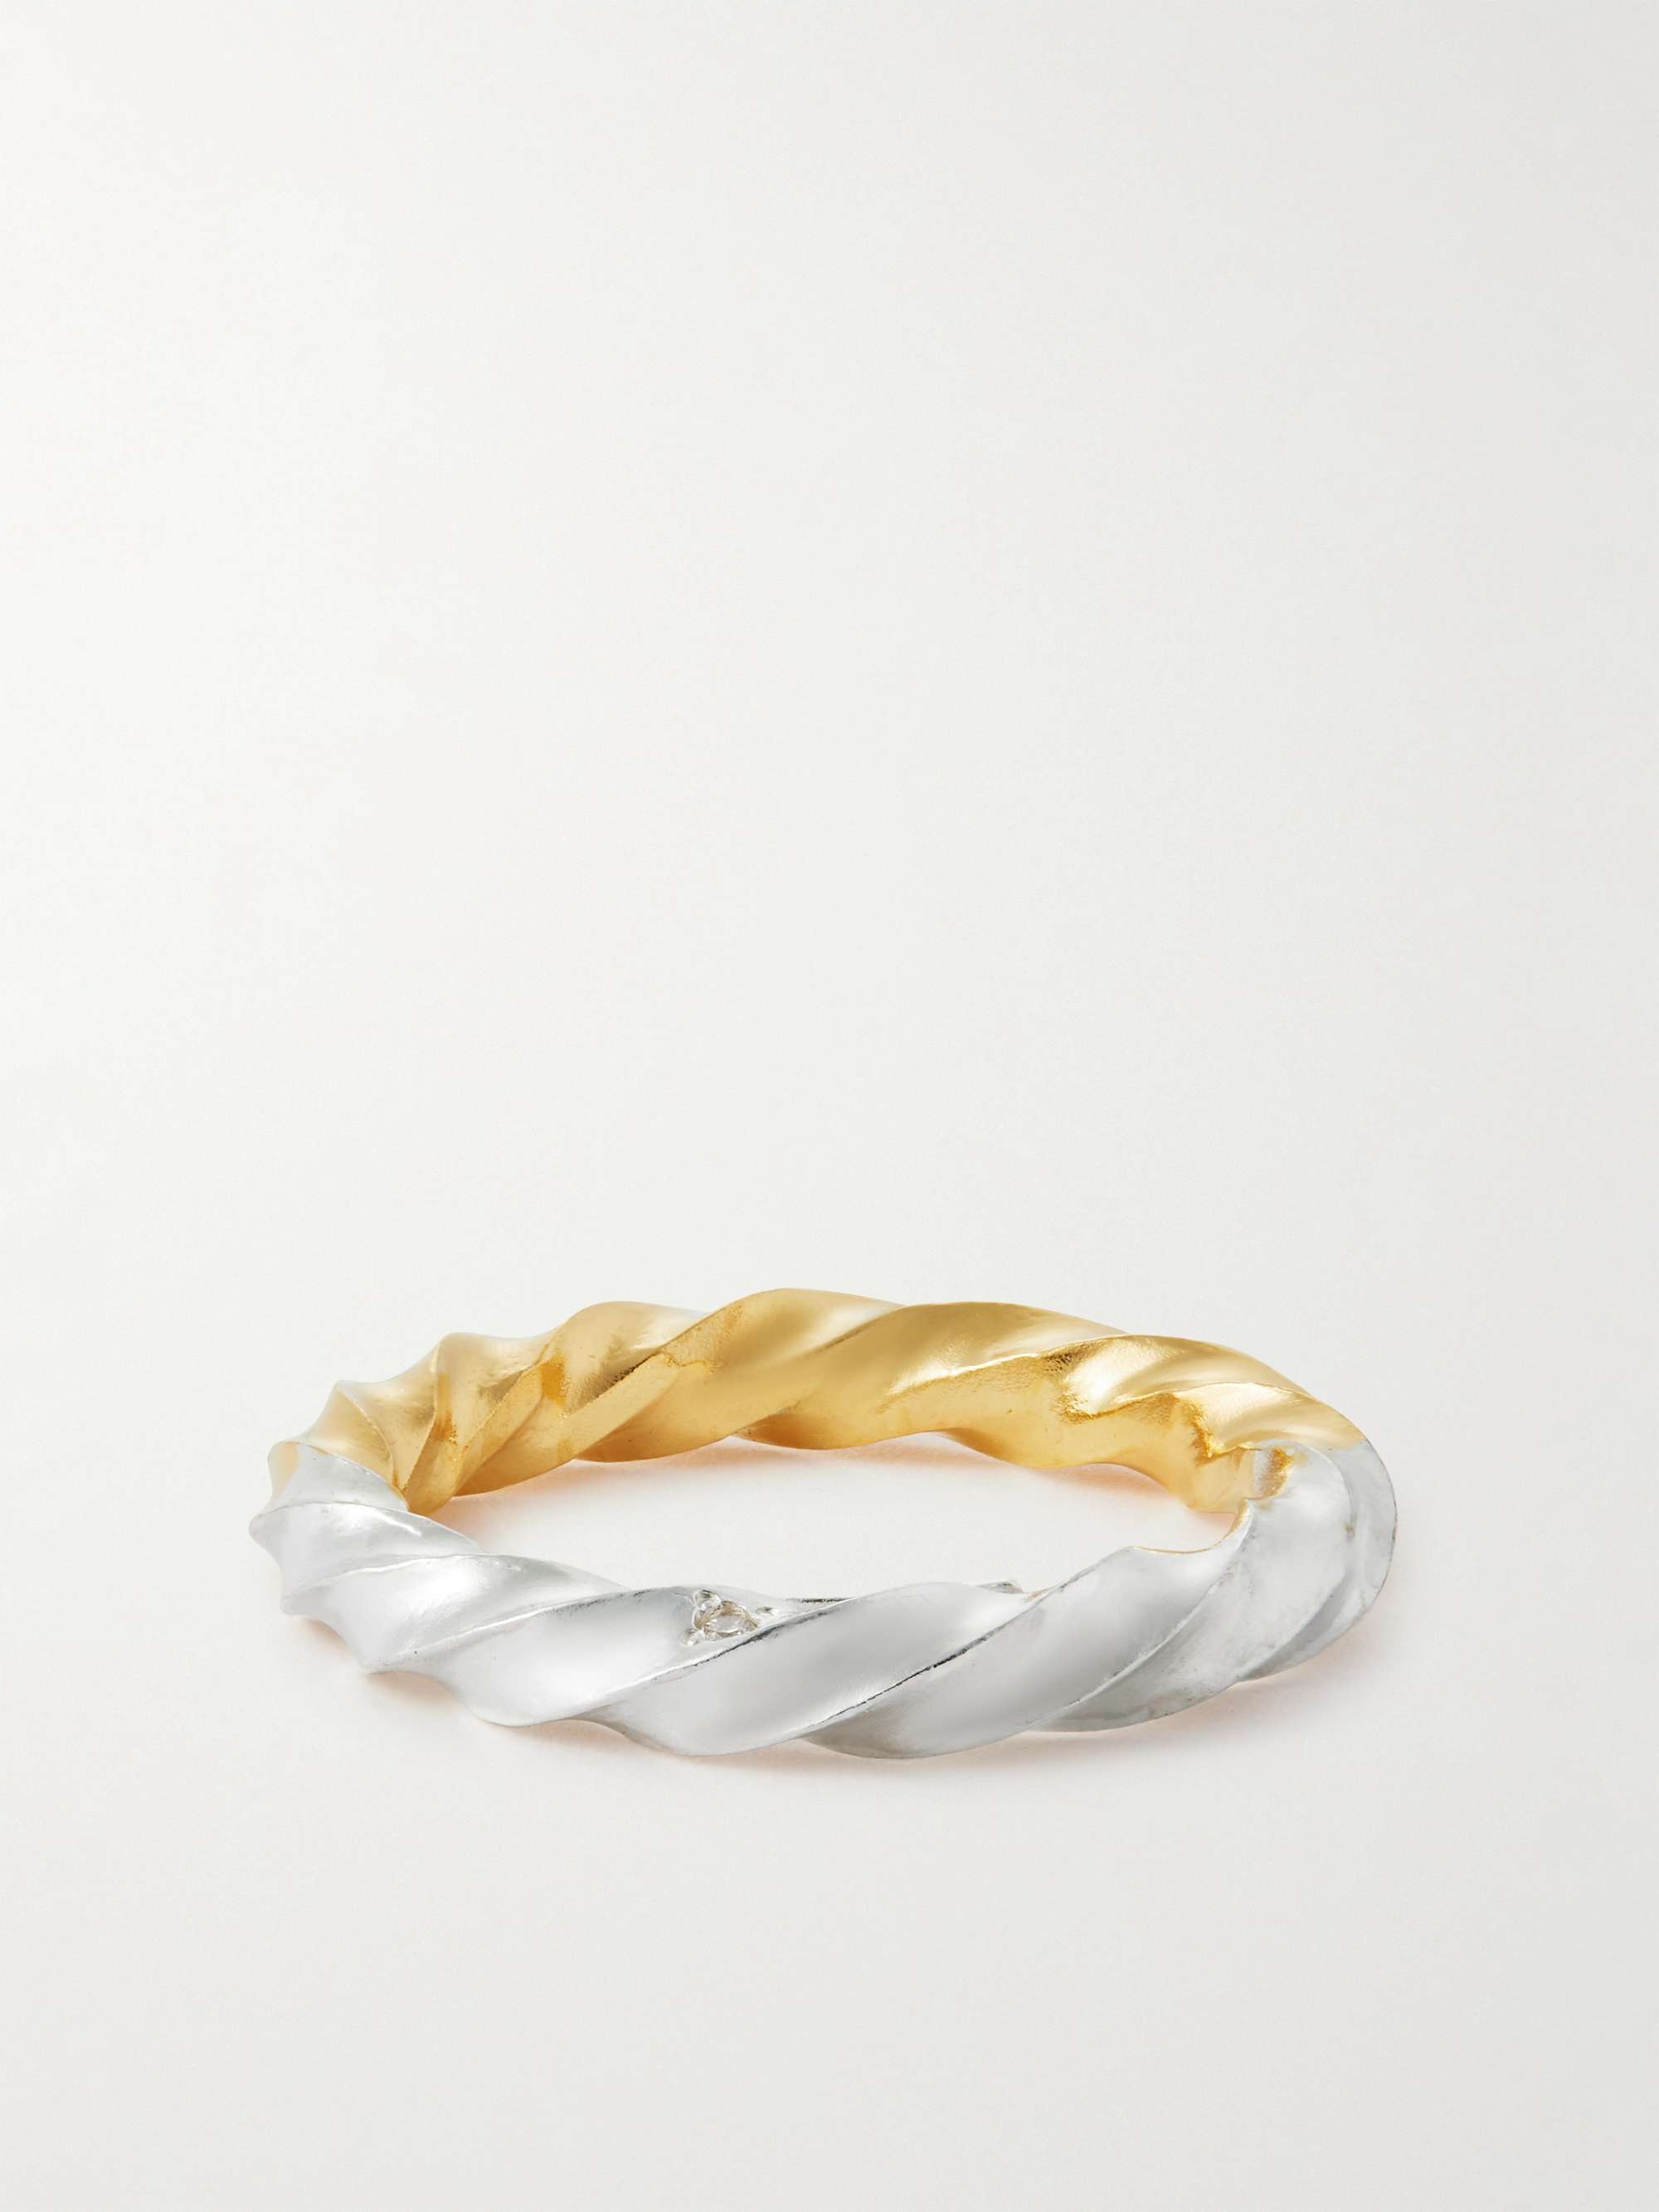 JAM HOMEMADE Kuru Kuru Twisted Silver and Gold-Plated Ring for Men